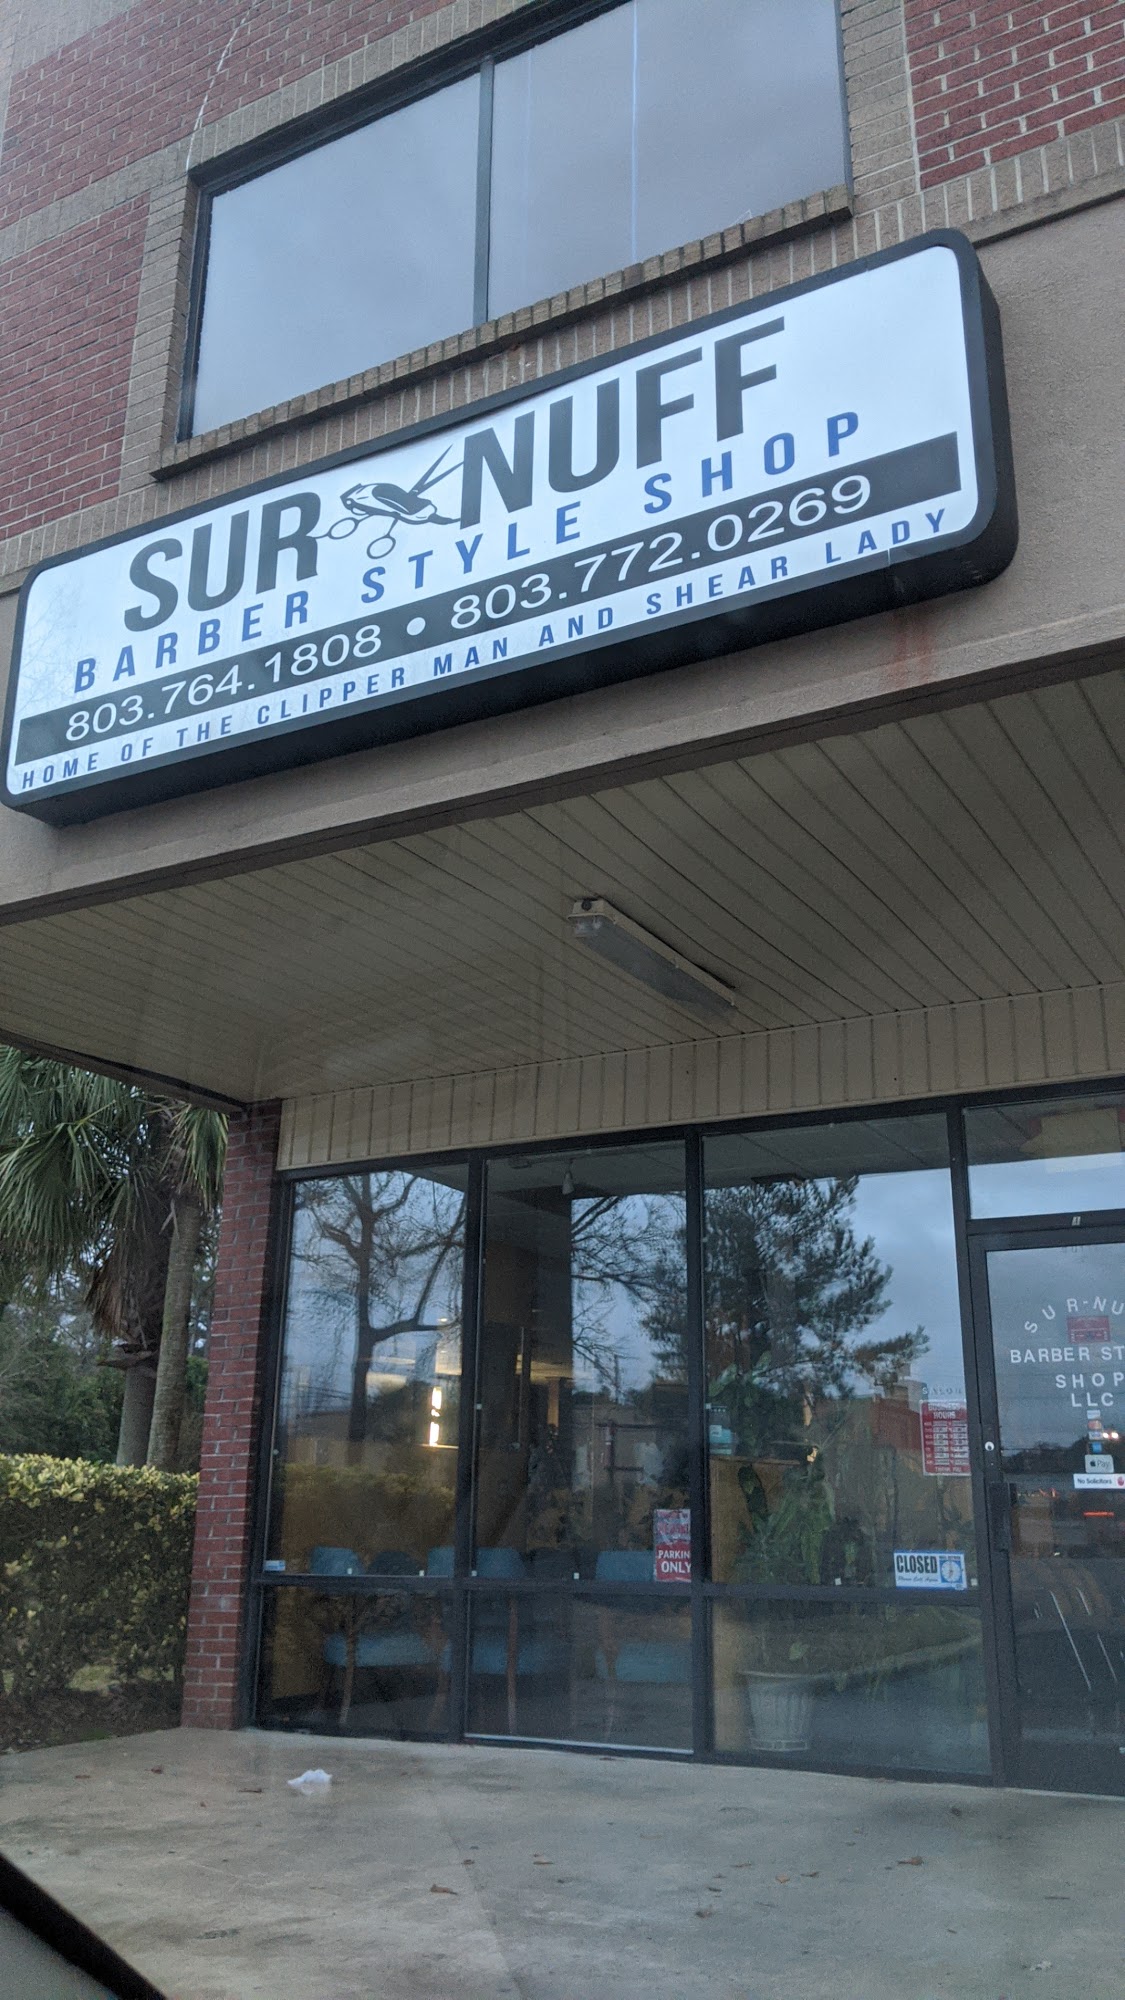 Sur-nuff Barber & Style Shop